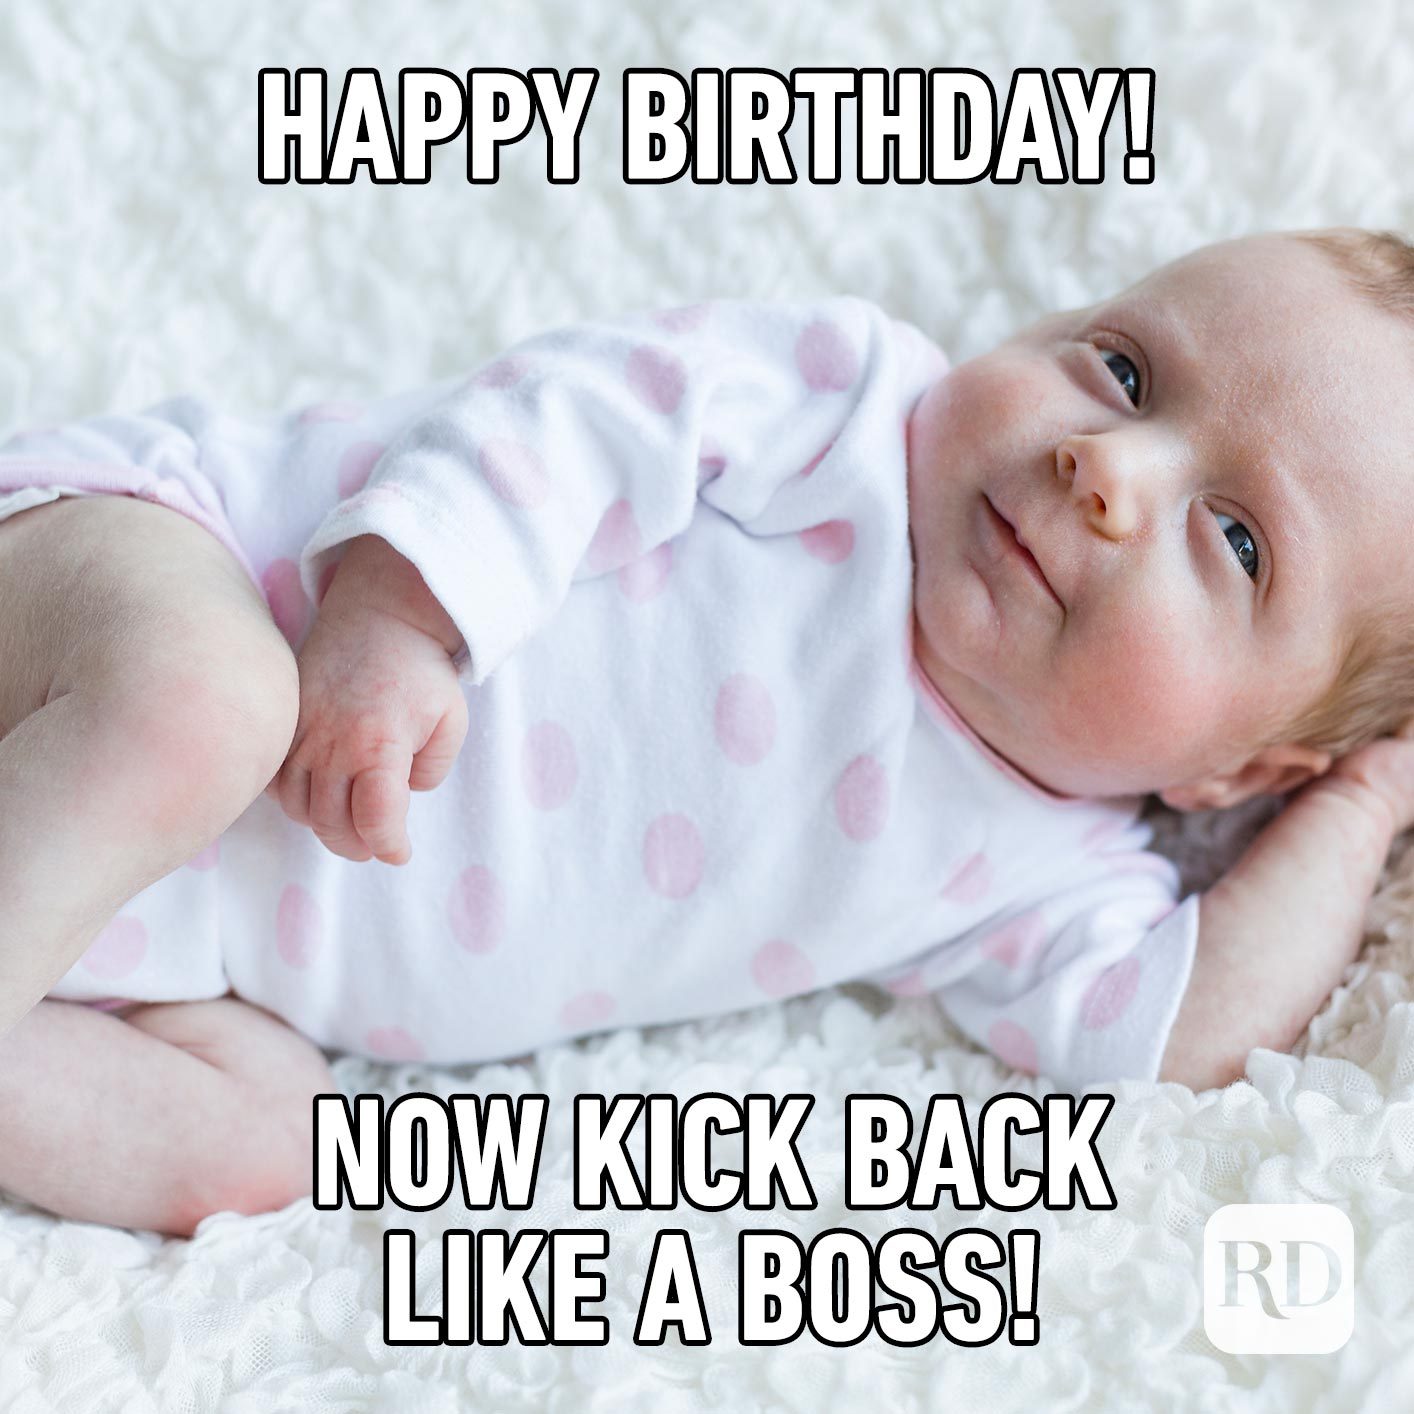 Happy birthday! Now kick back like a boss.